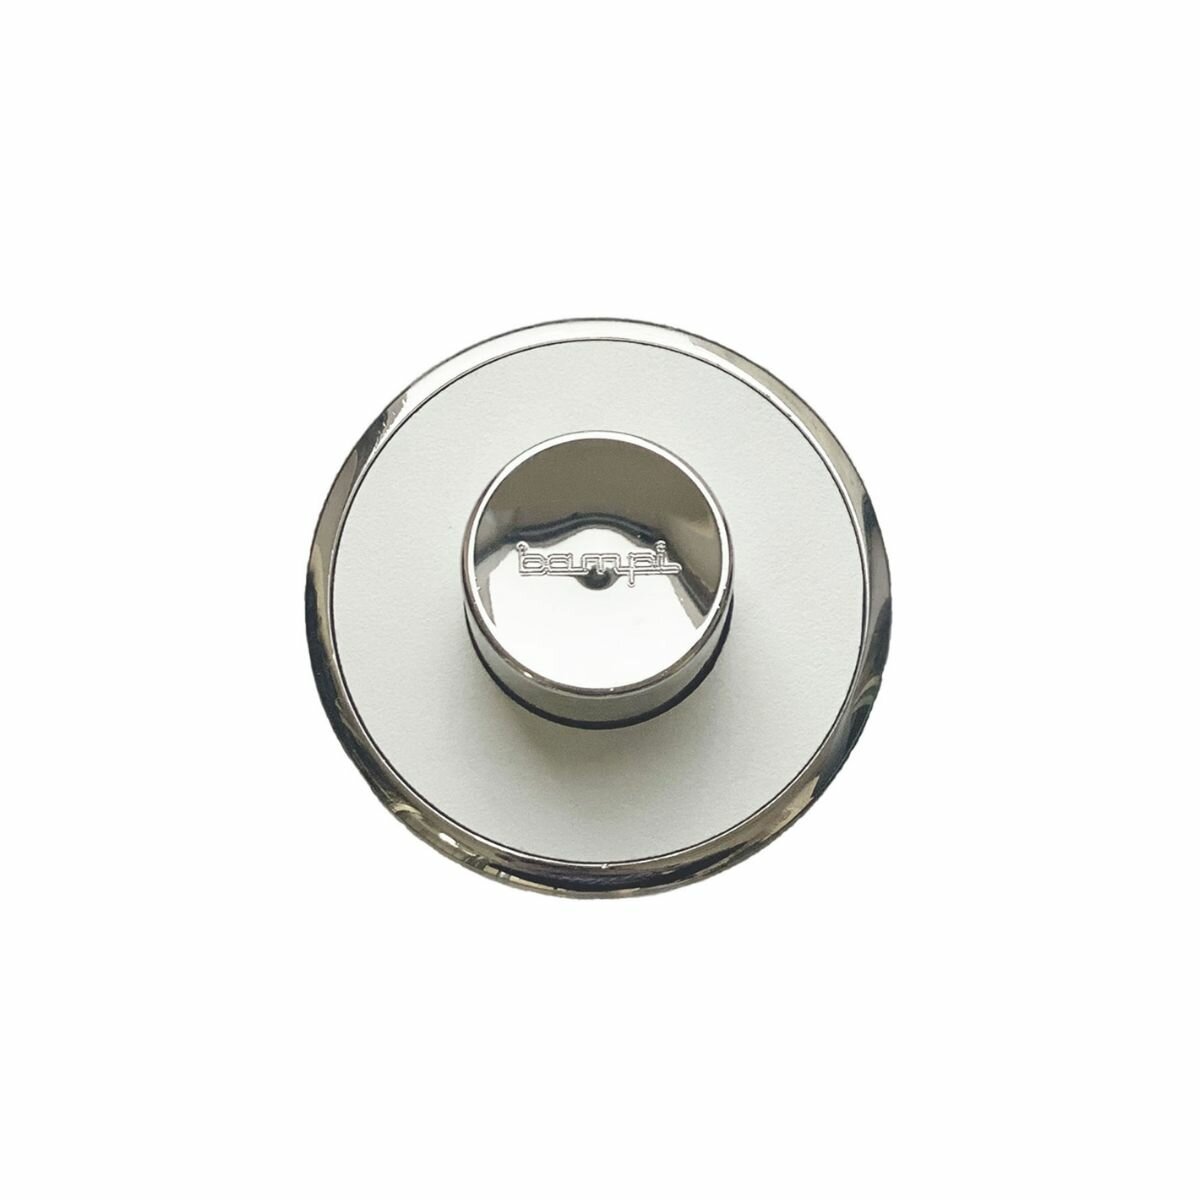 Bampi PUSH RING pneumatic toilet button with single flush